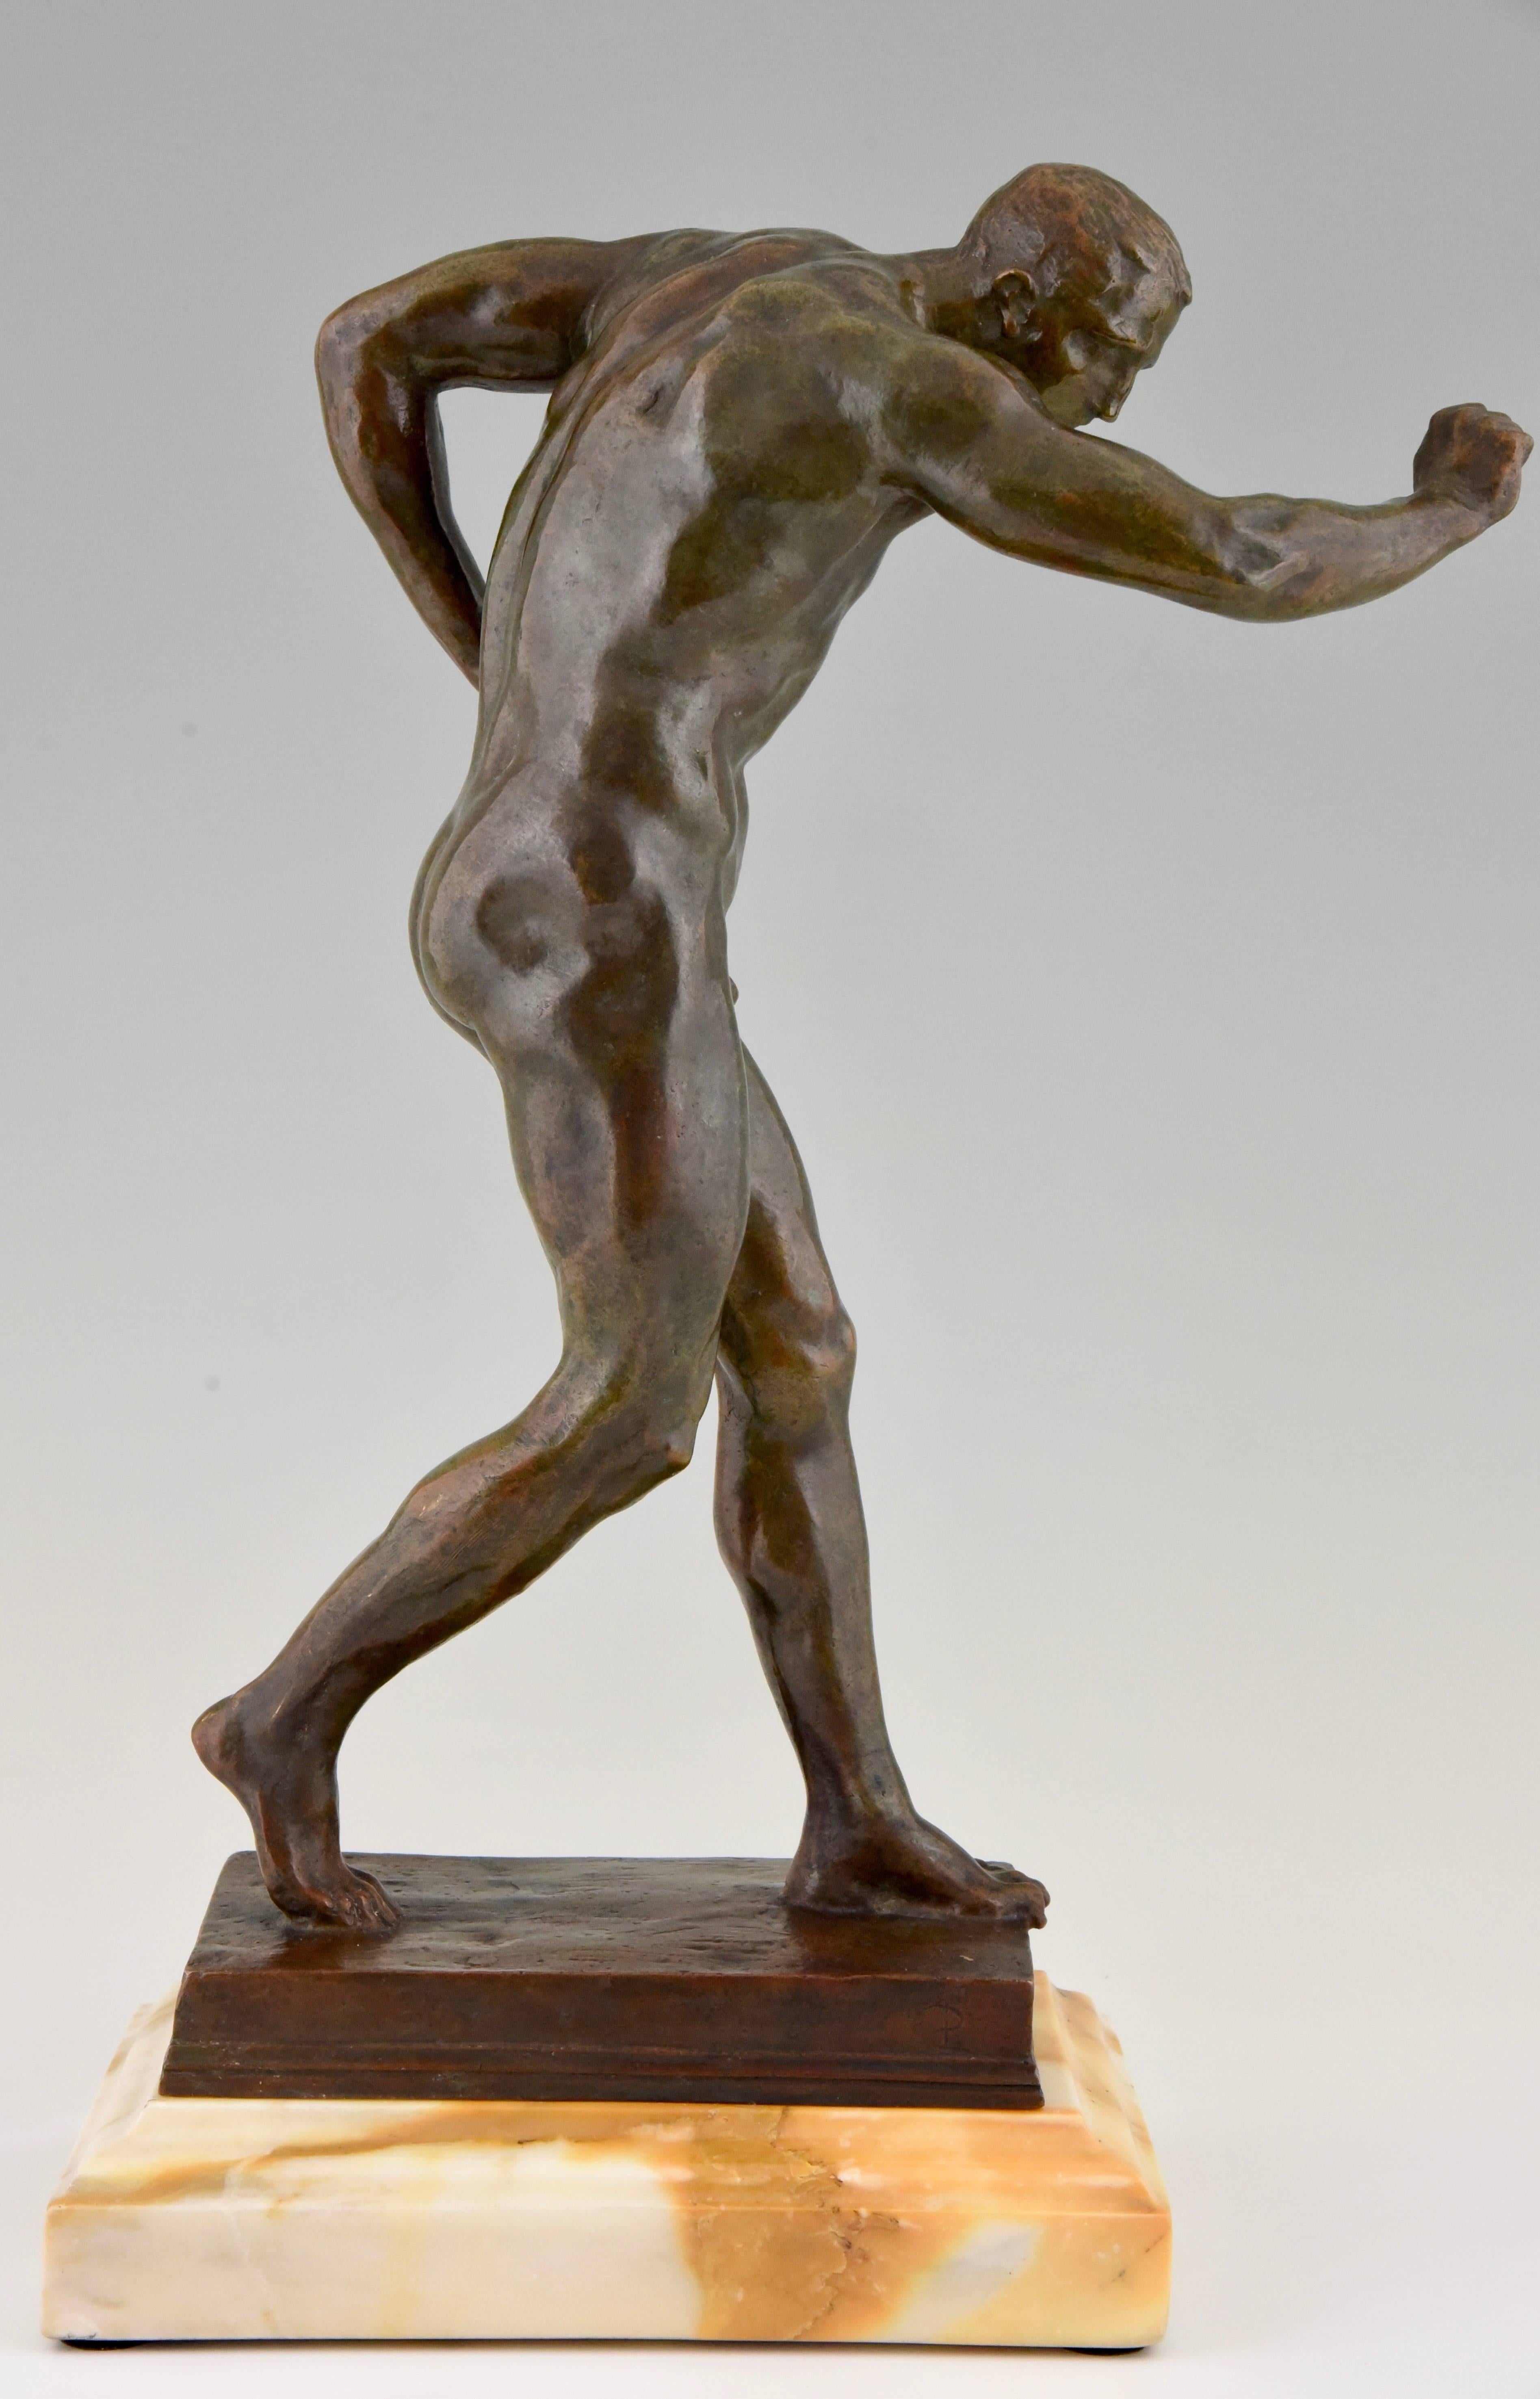 20th Century Antique Italian Bronze Sculpture of a Male Nude Athlete, circa 1900